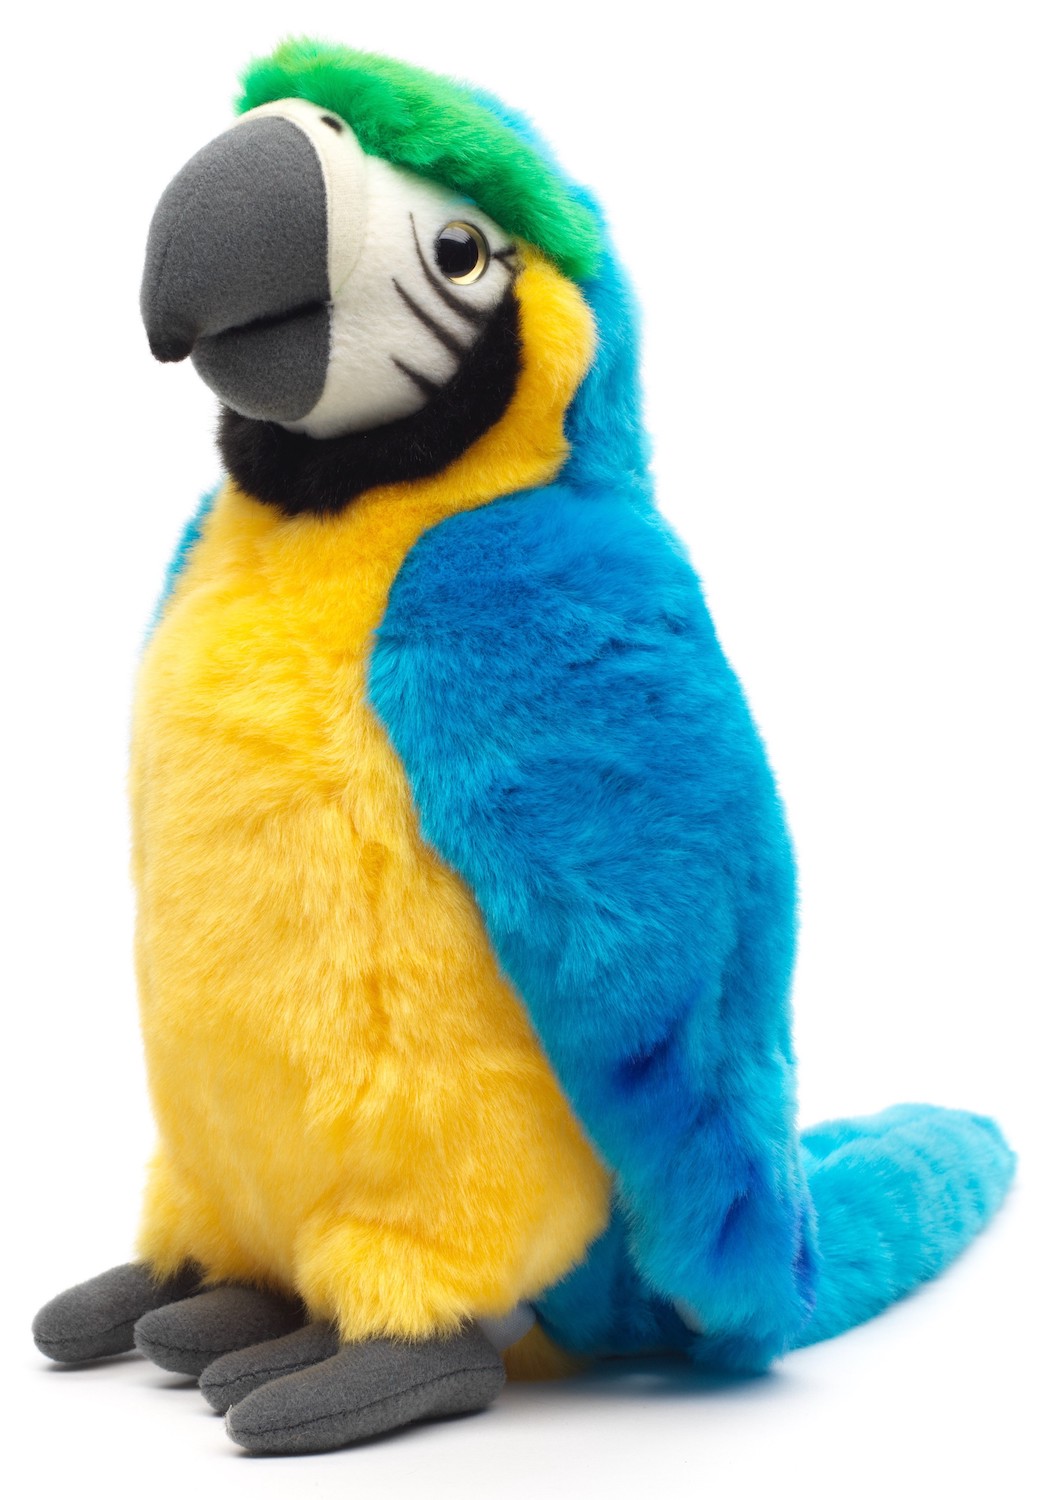  Parrot - 28 cm (height) - Plush bird 